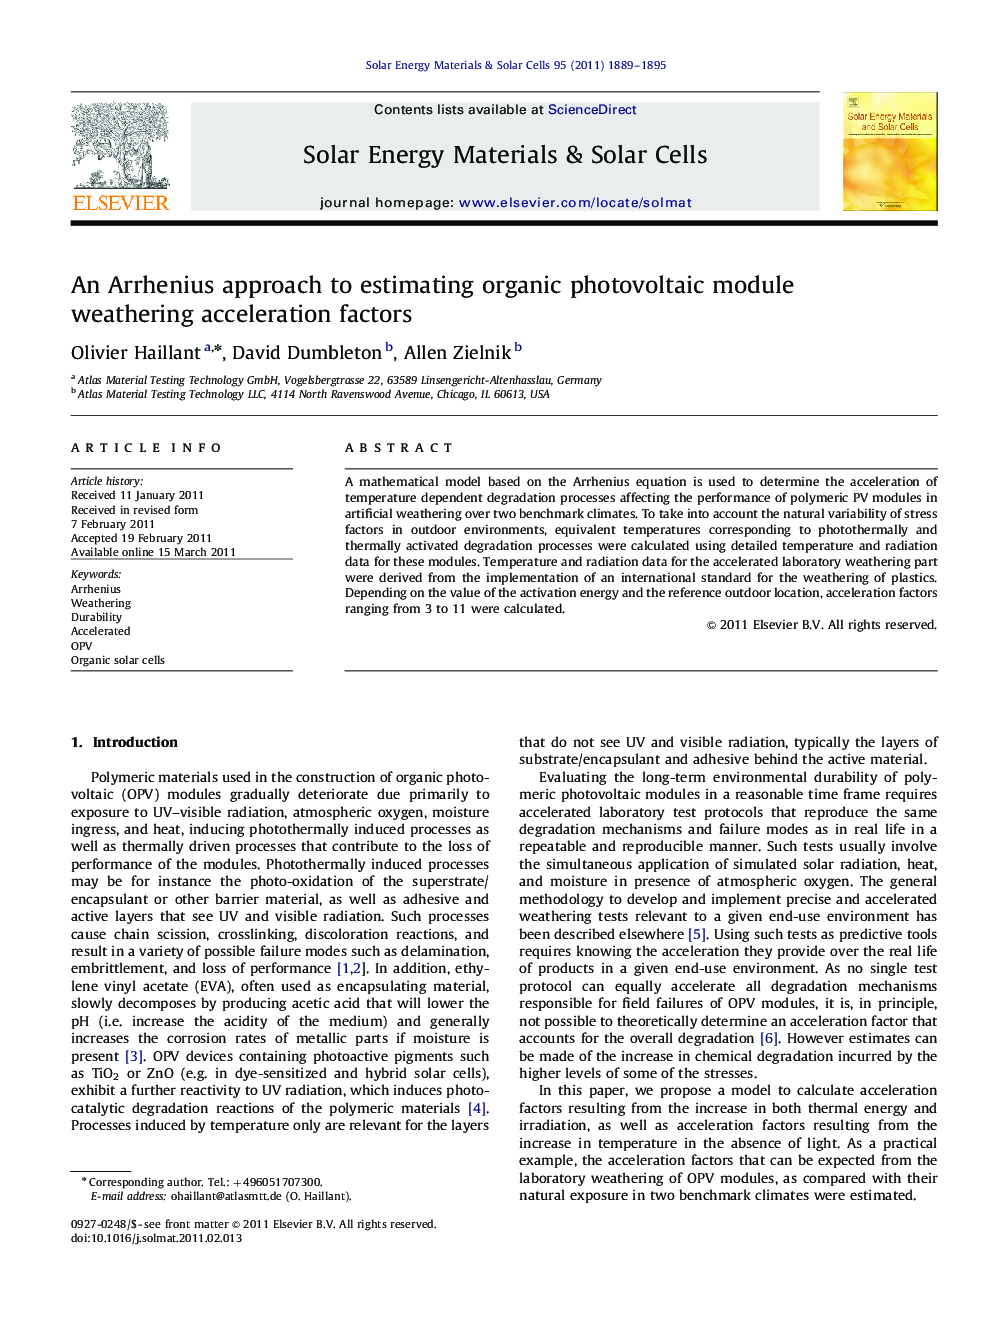 An Arrhenius approach to estimating organic photovoltaic module weathering acceleration factors